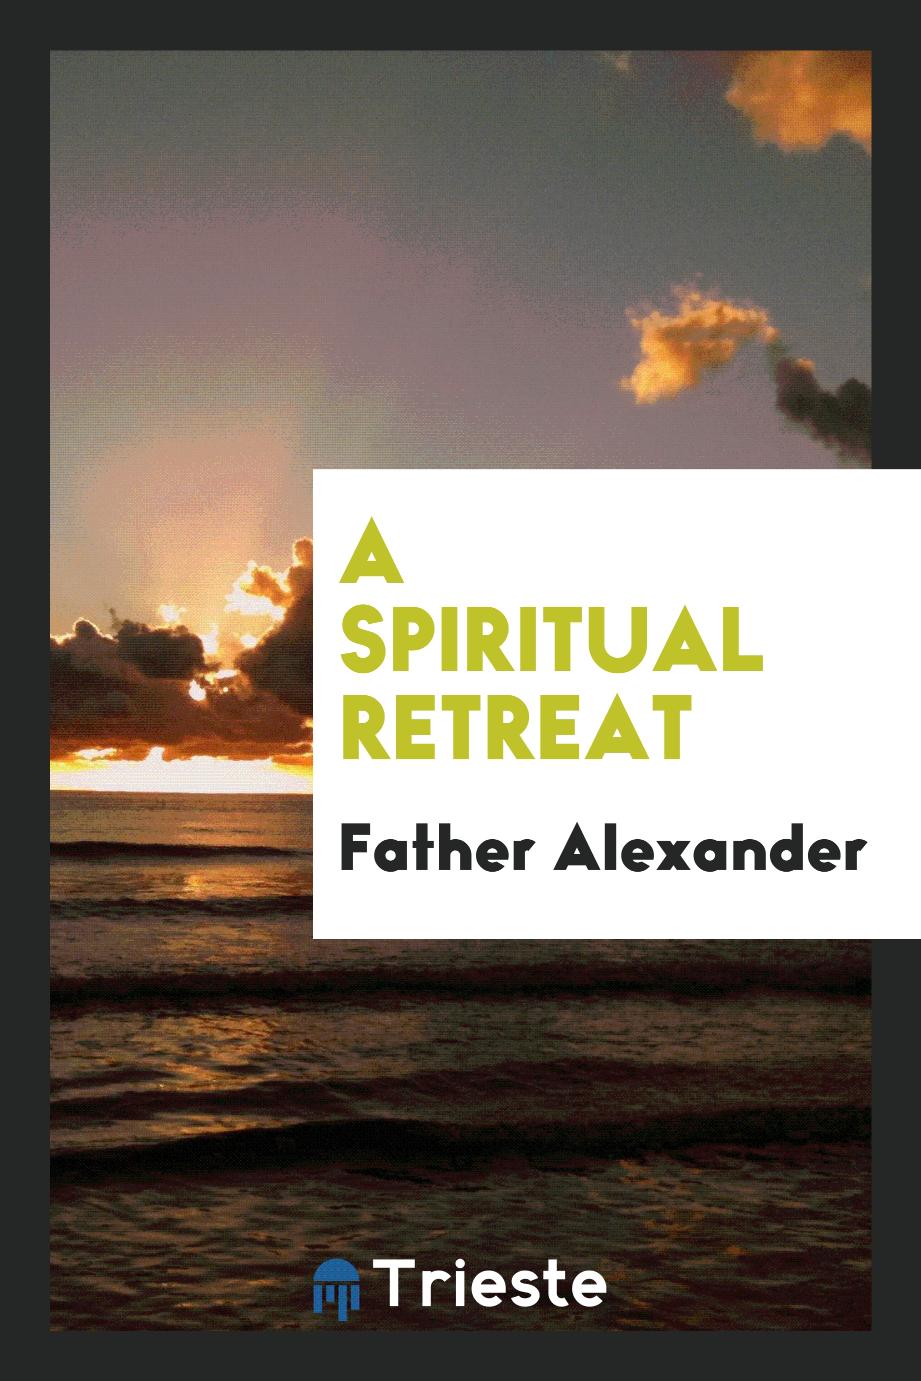 A spiritual retreat